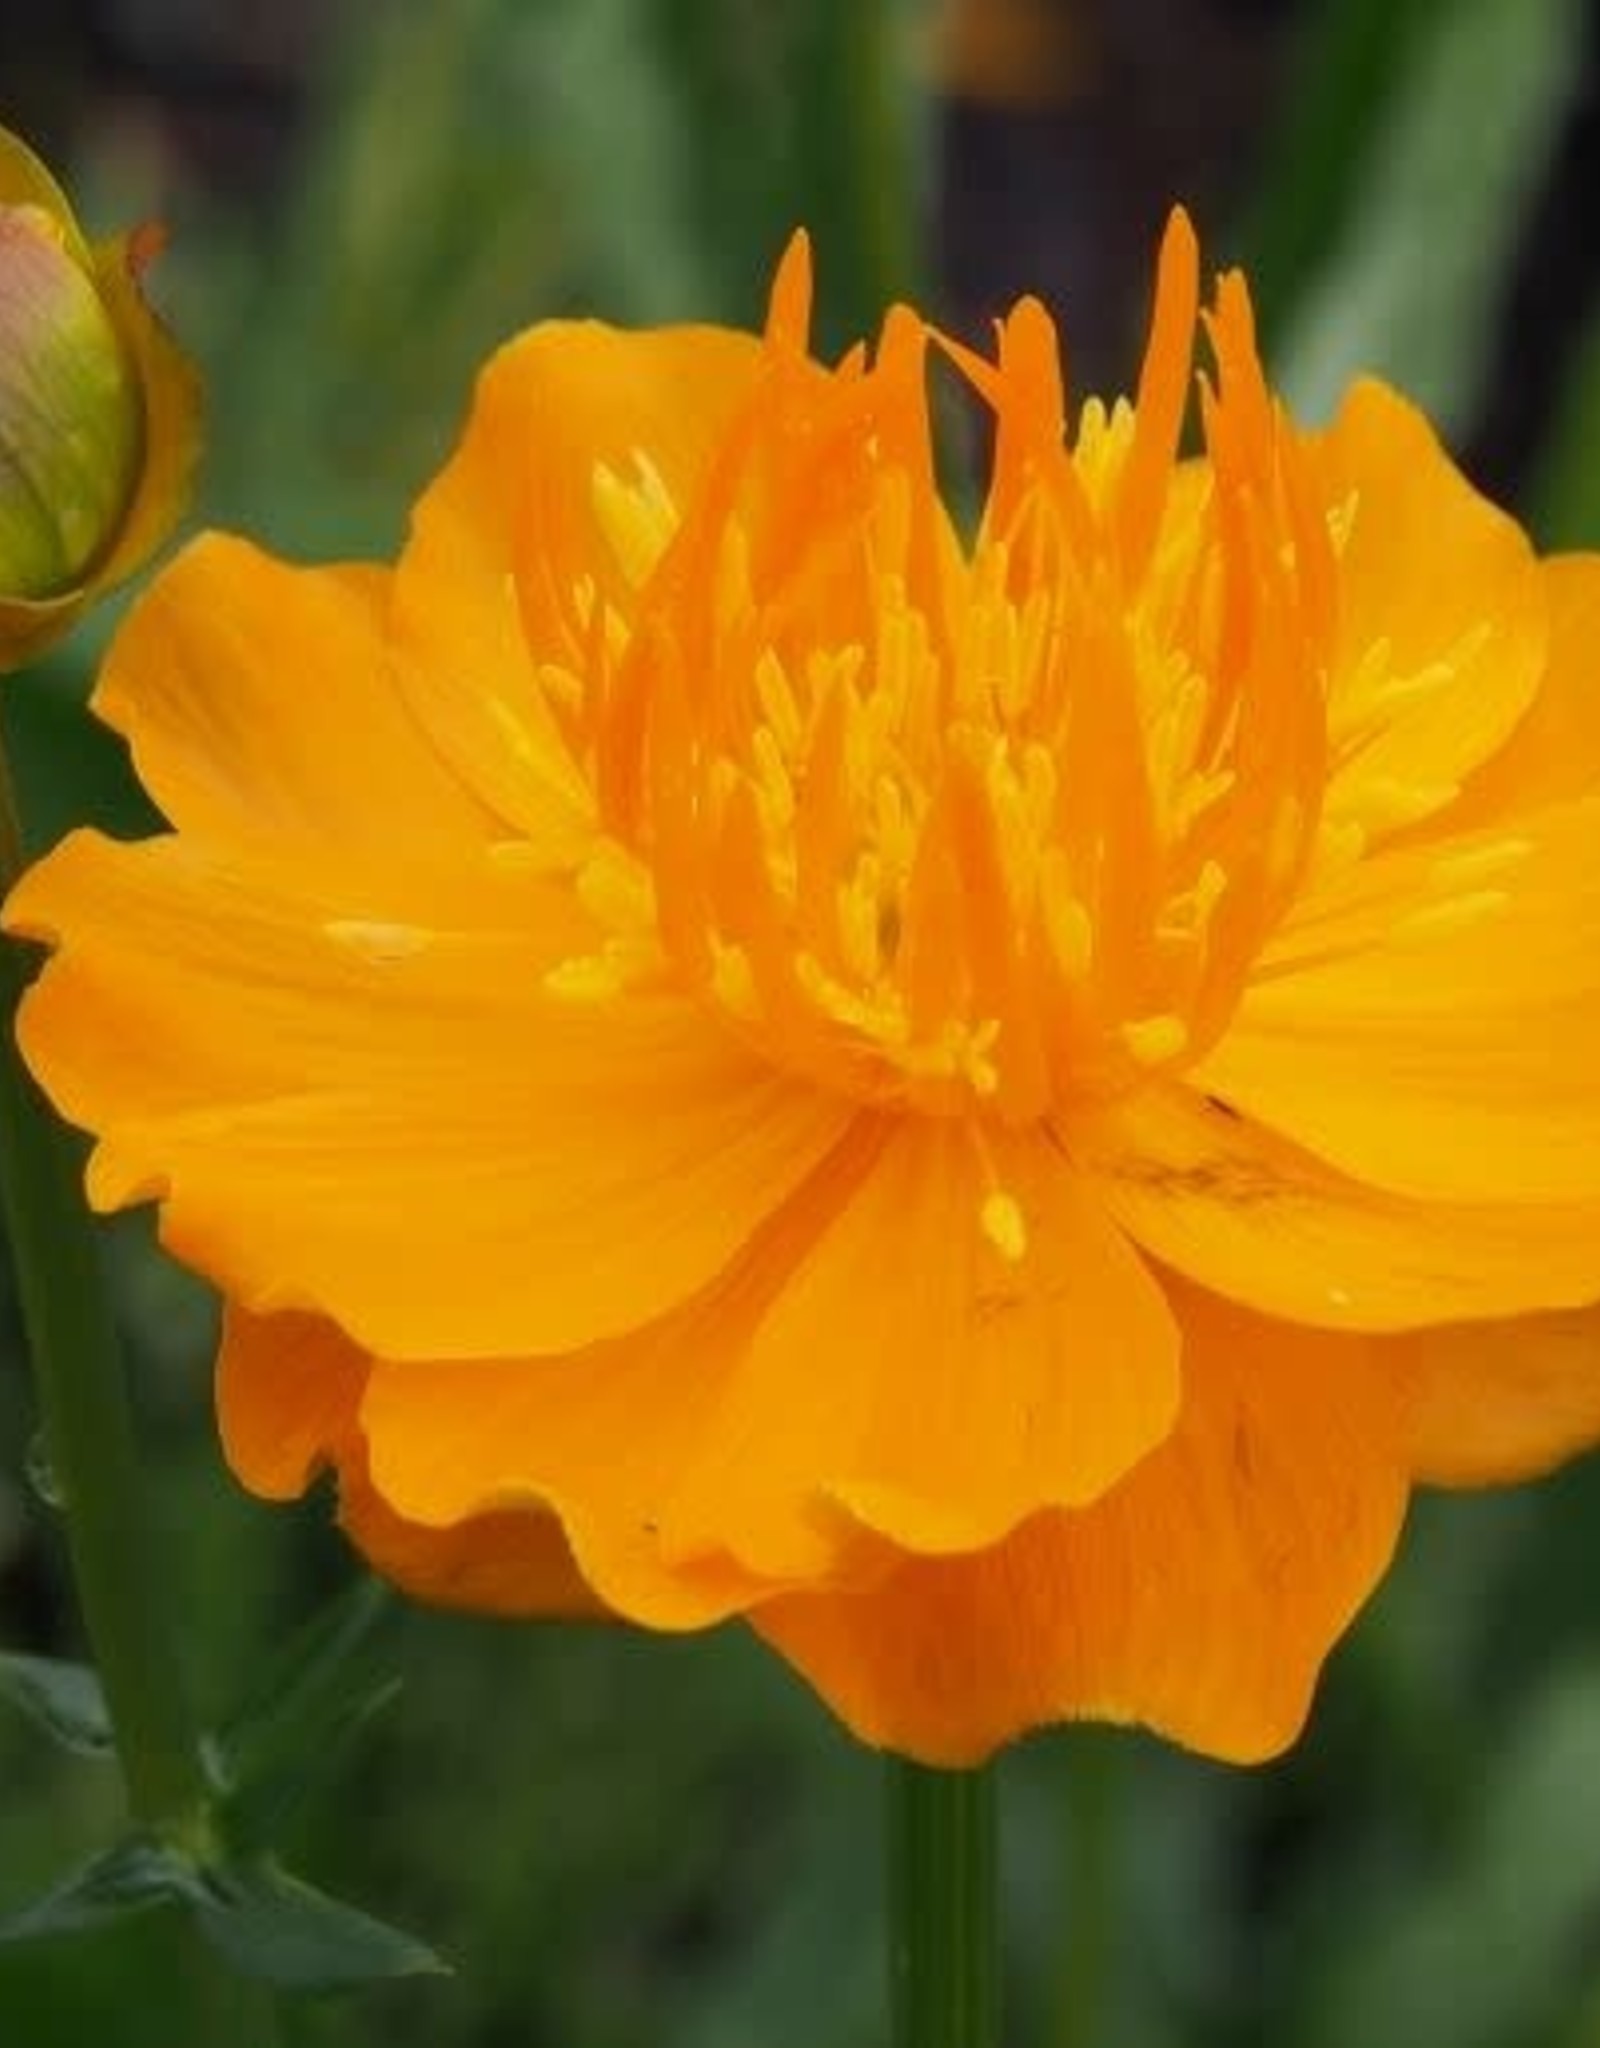 Bron and Sons Trollius x cultorum 'Orange Princess' #1 - Orange Princess Globeflower